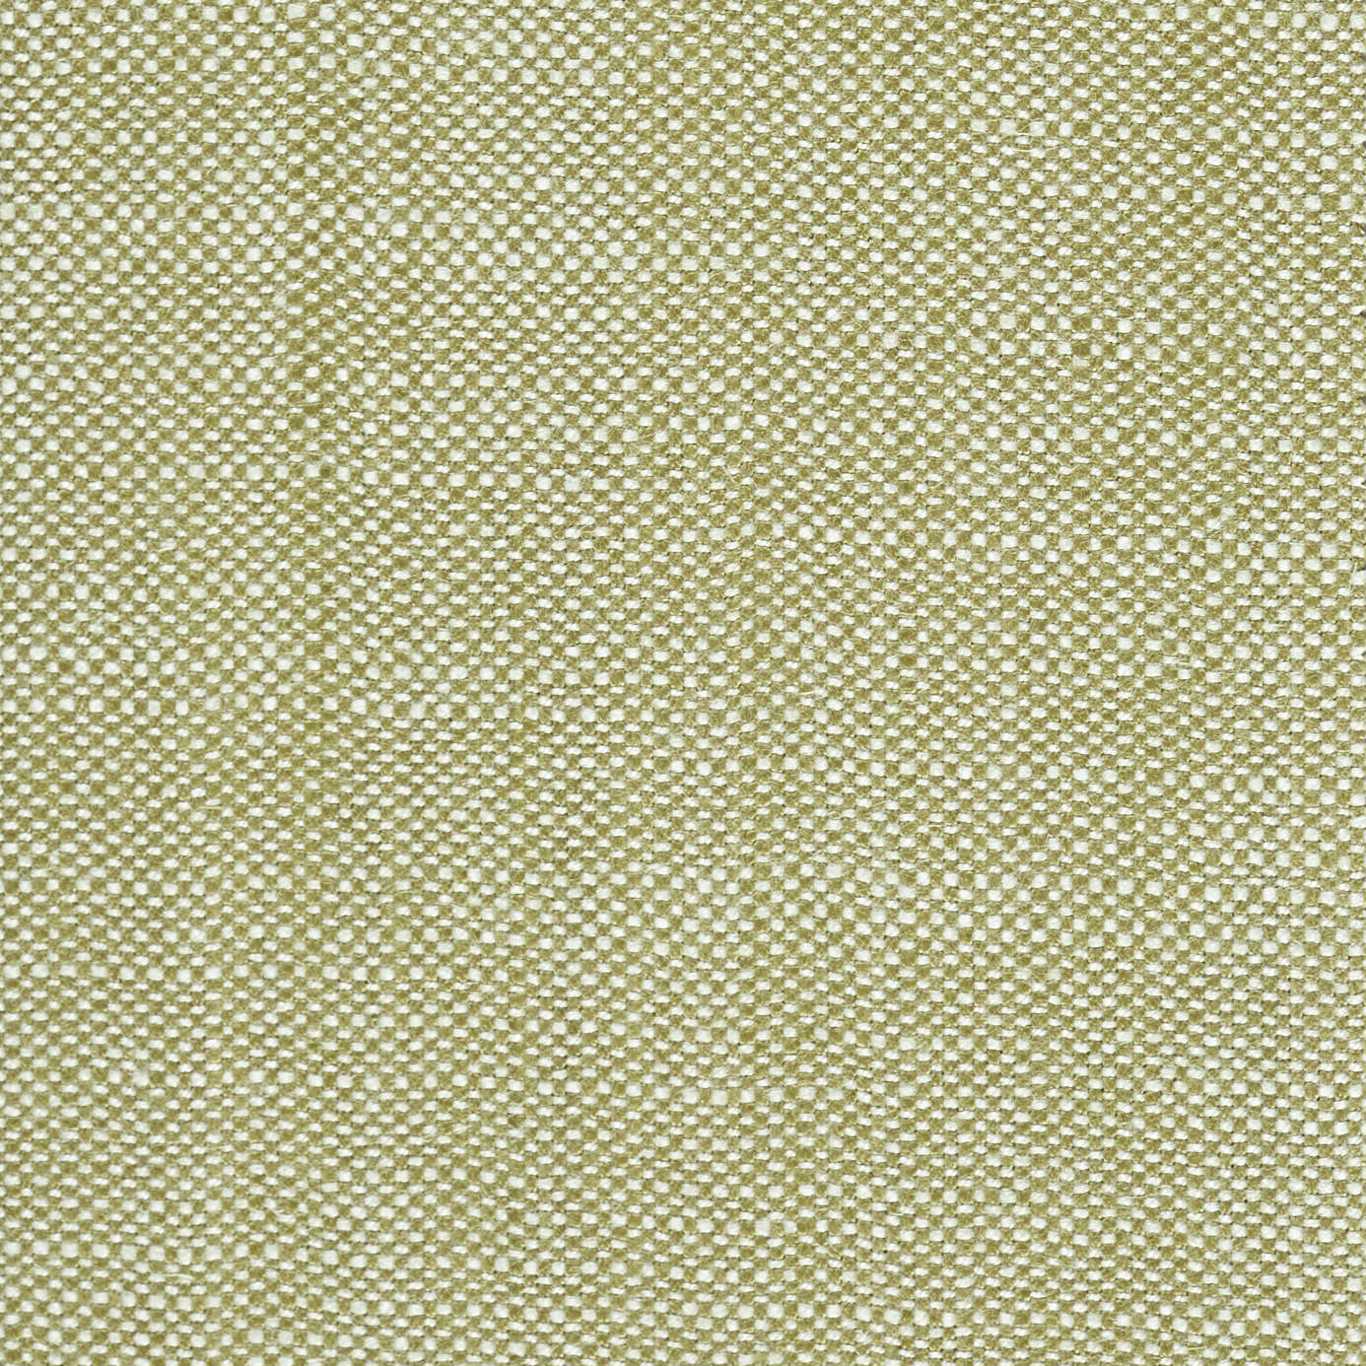 Atom Wicker Fabric by HAR